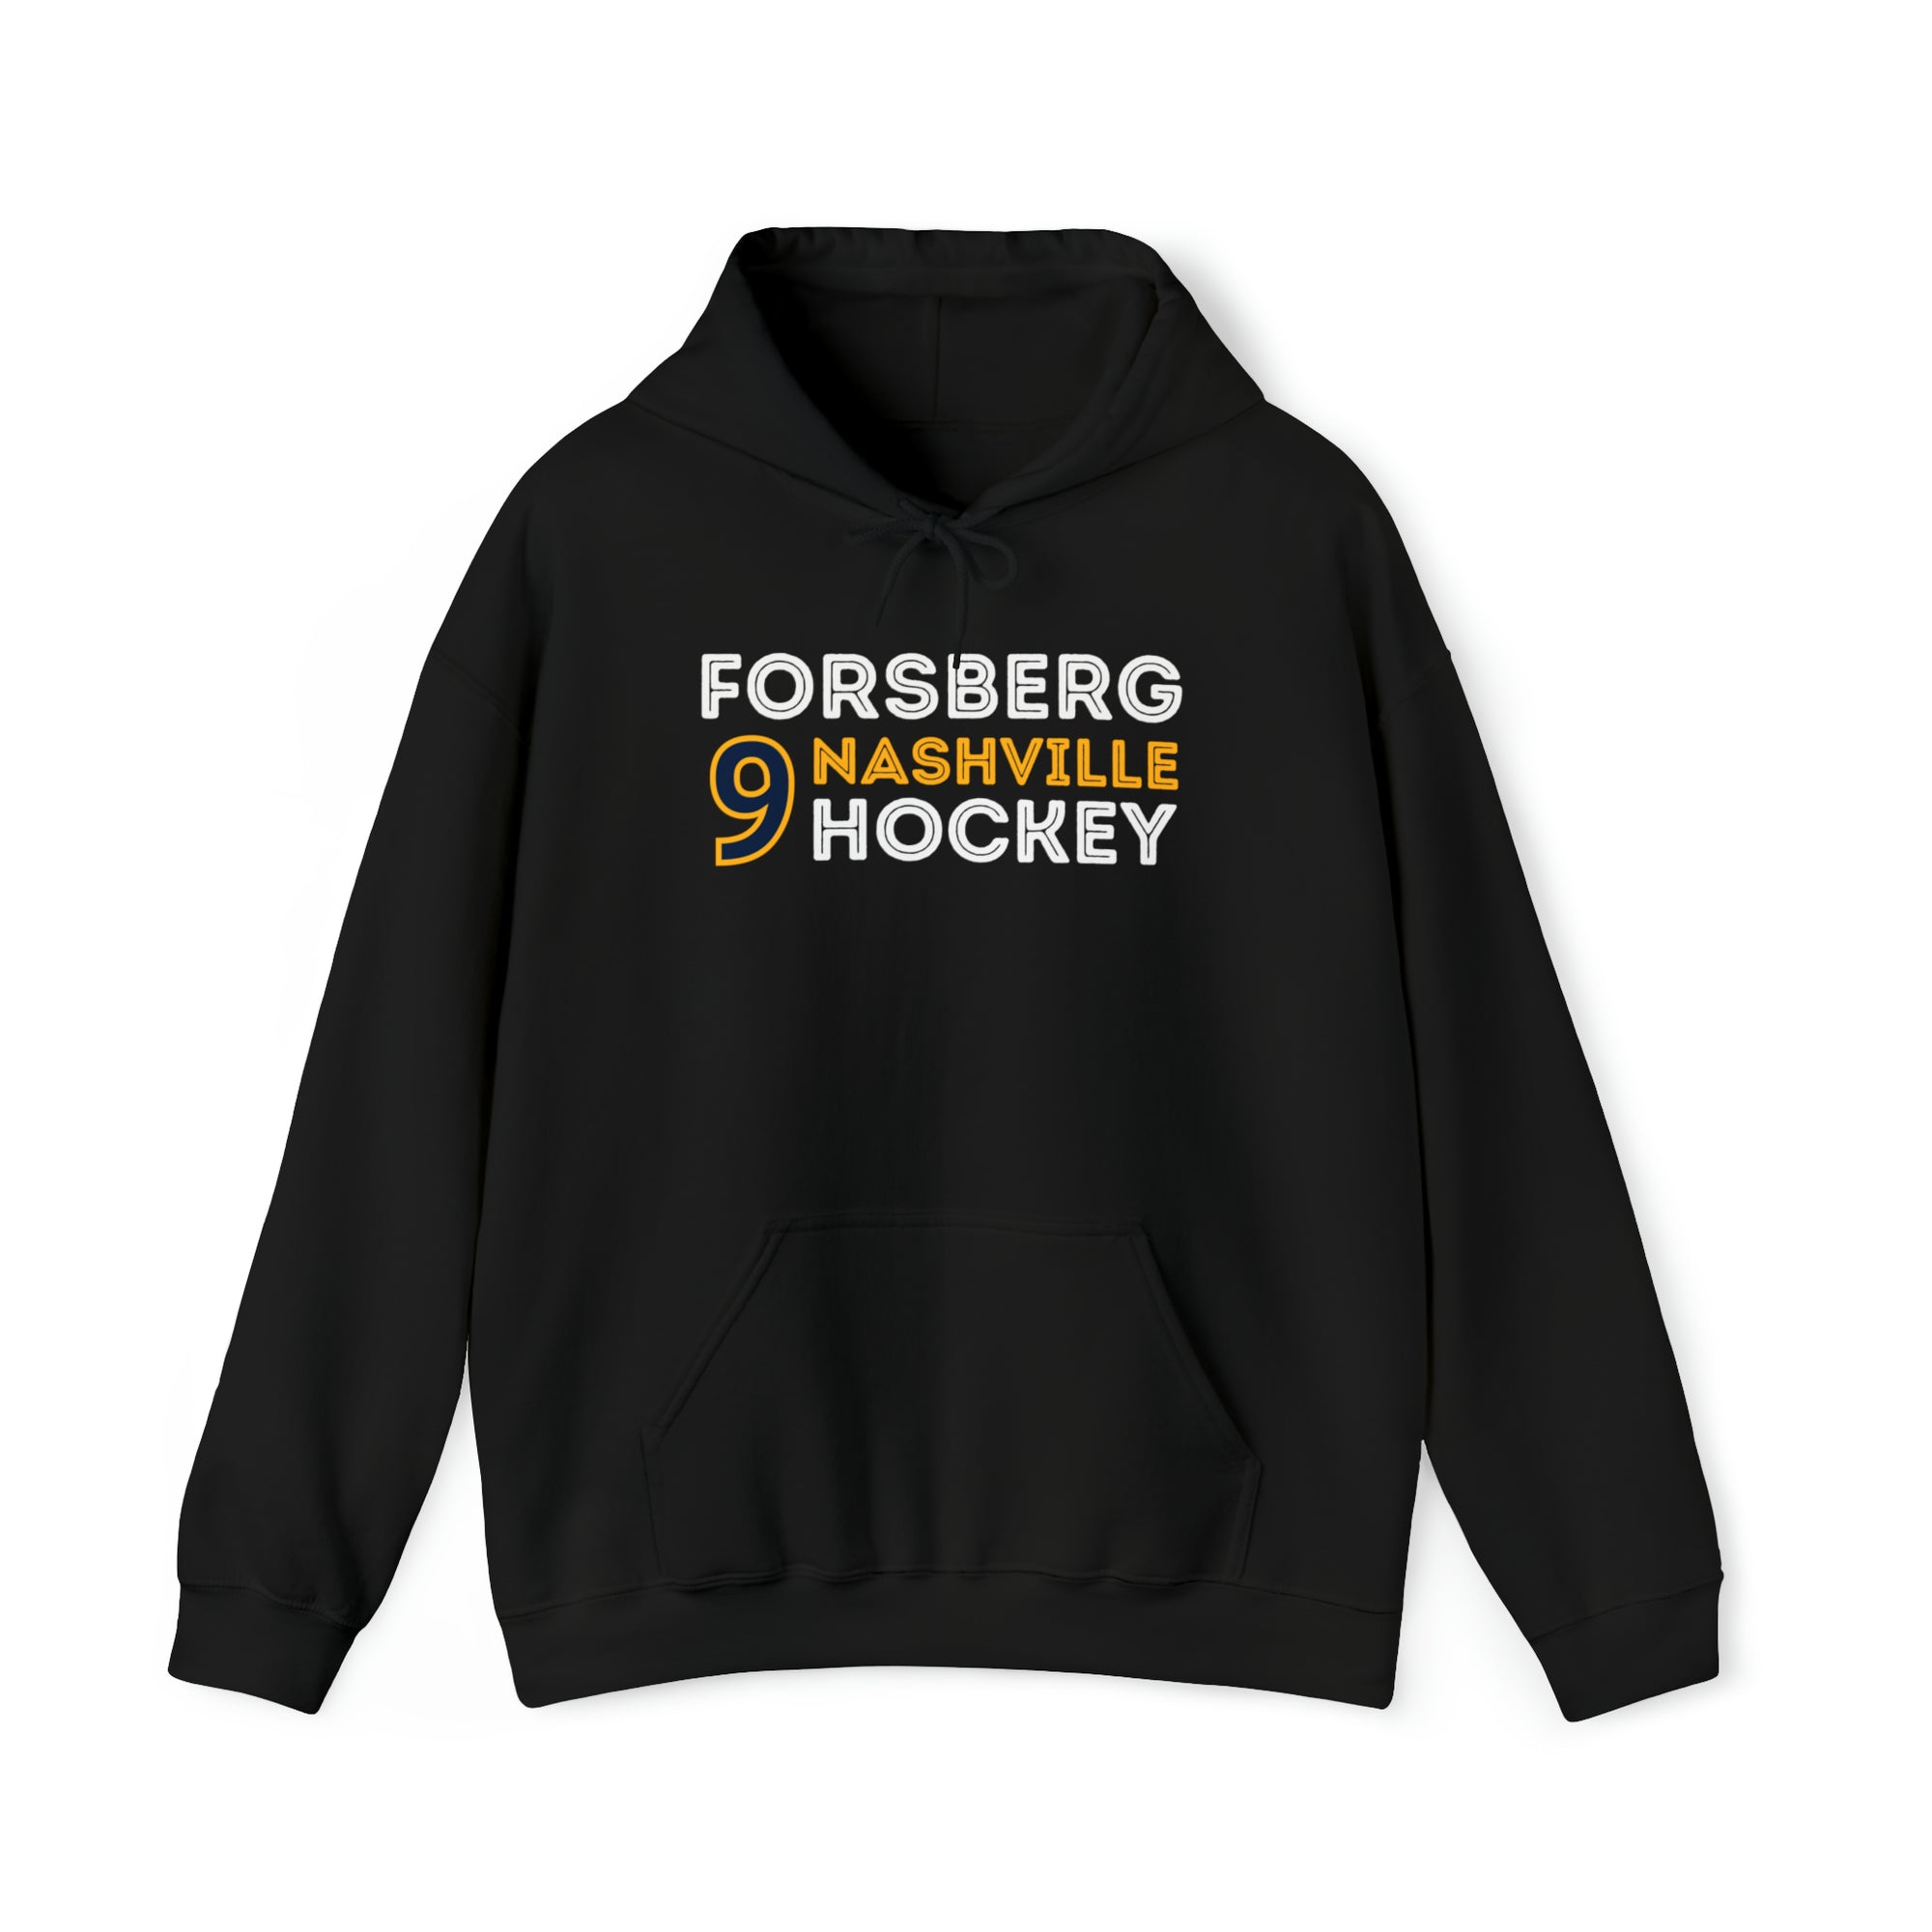 Forsberg 9 Nashville Hockey Grafitti Wall Design Unisex Hooded Sweatshirt